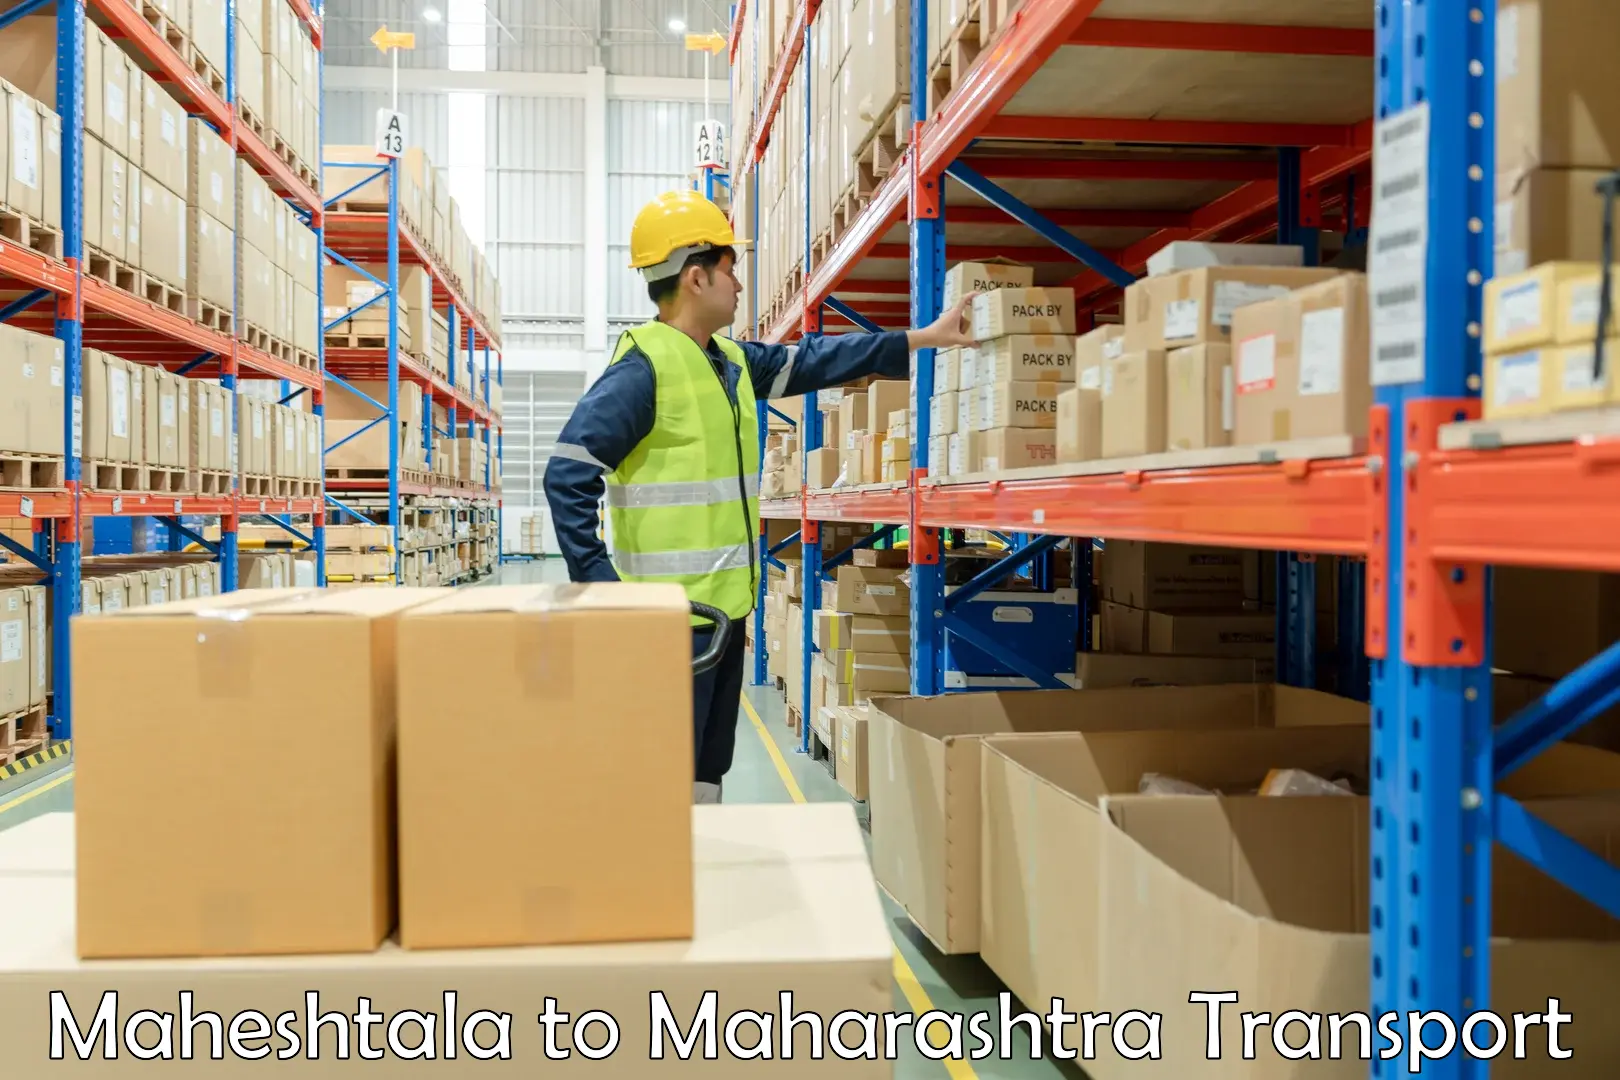 Transport shared services Maheshtala to Greater Thane